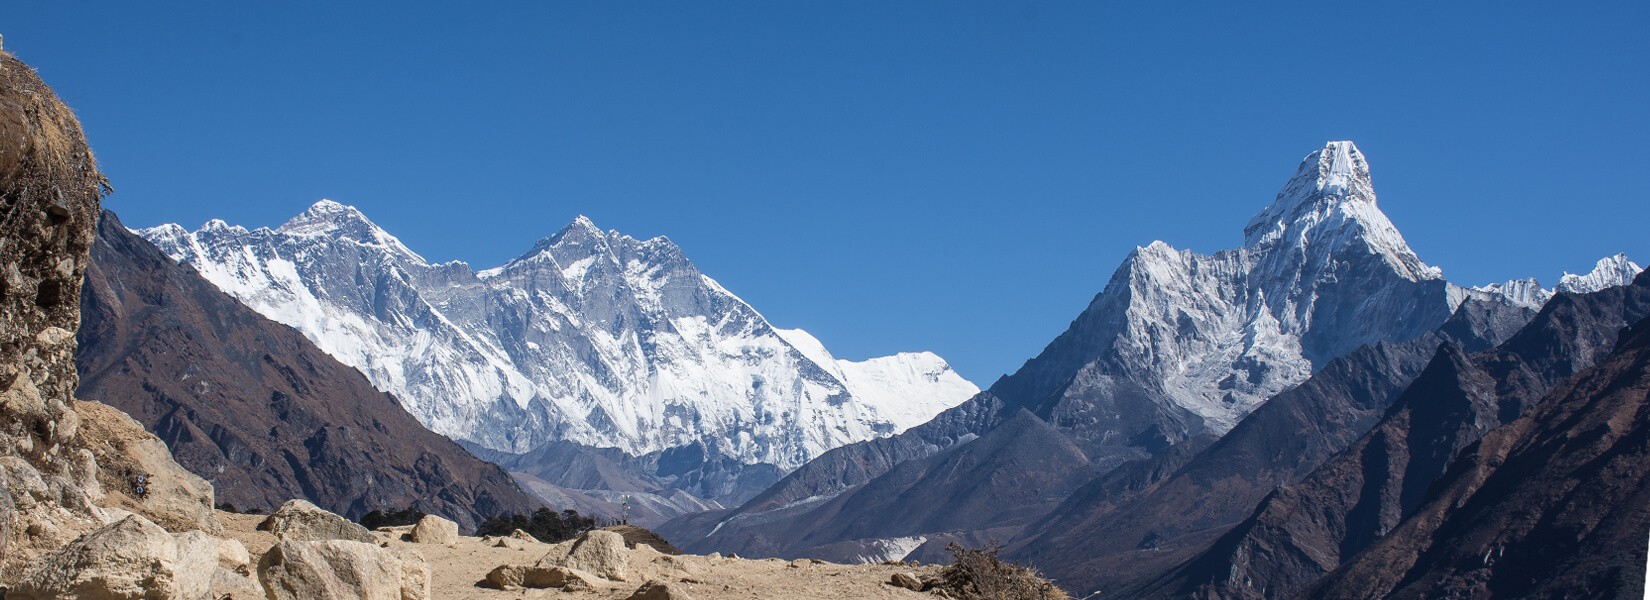 Everest with Amadablam